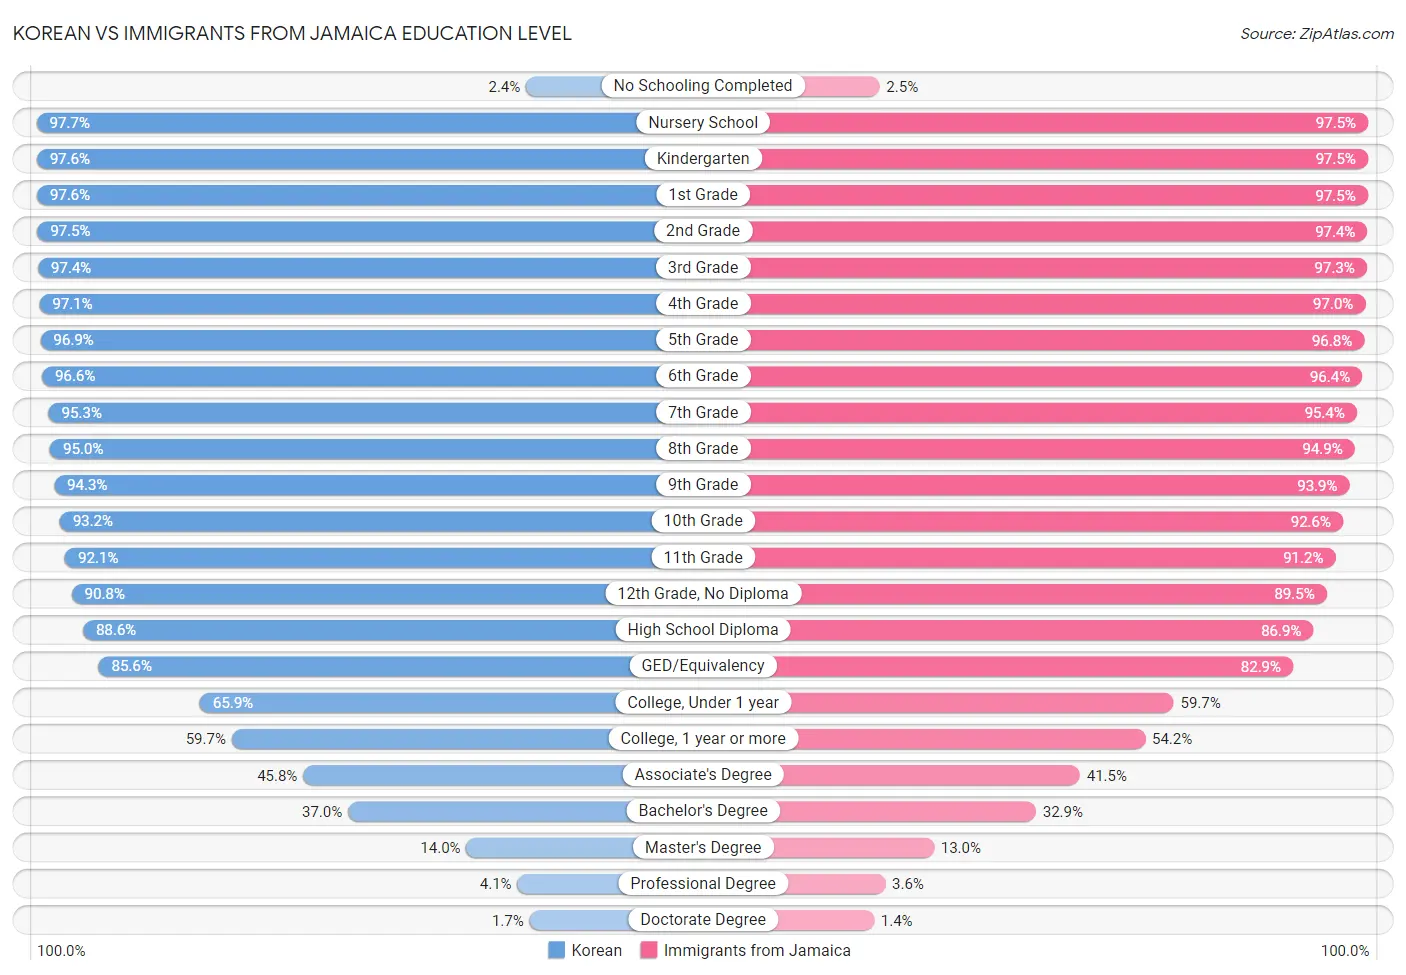 Korean vs Immigrants from Jamaica Education Level